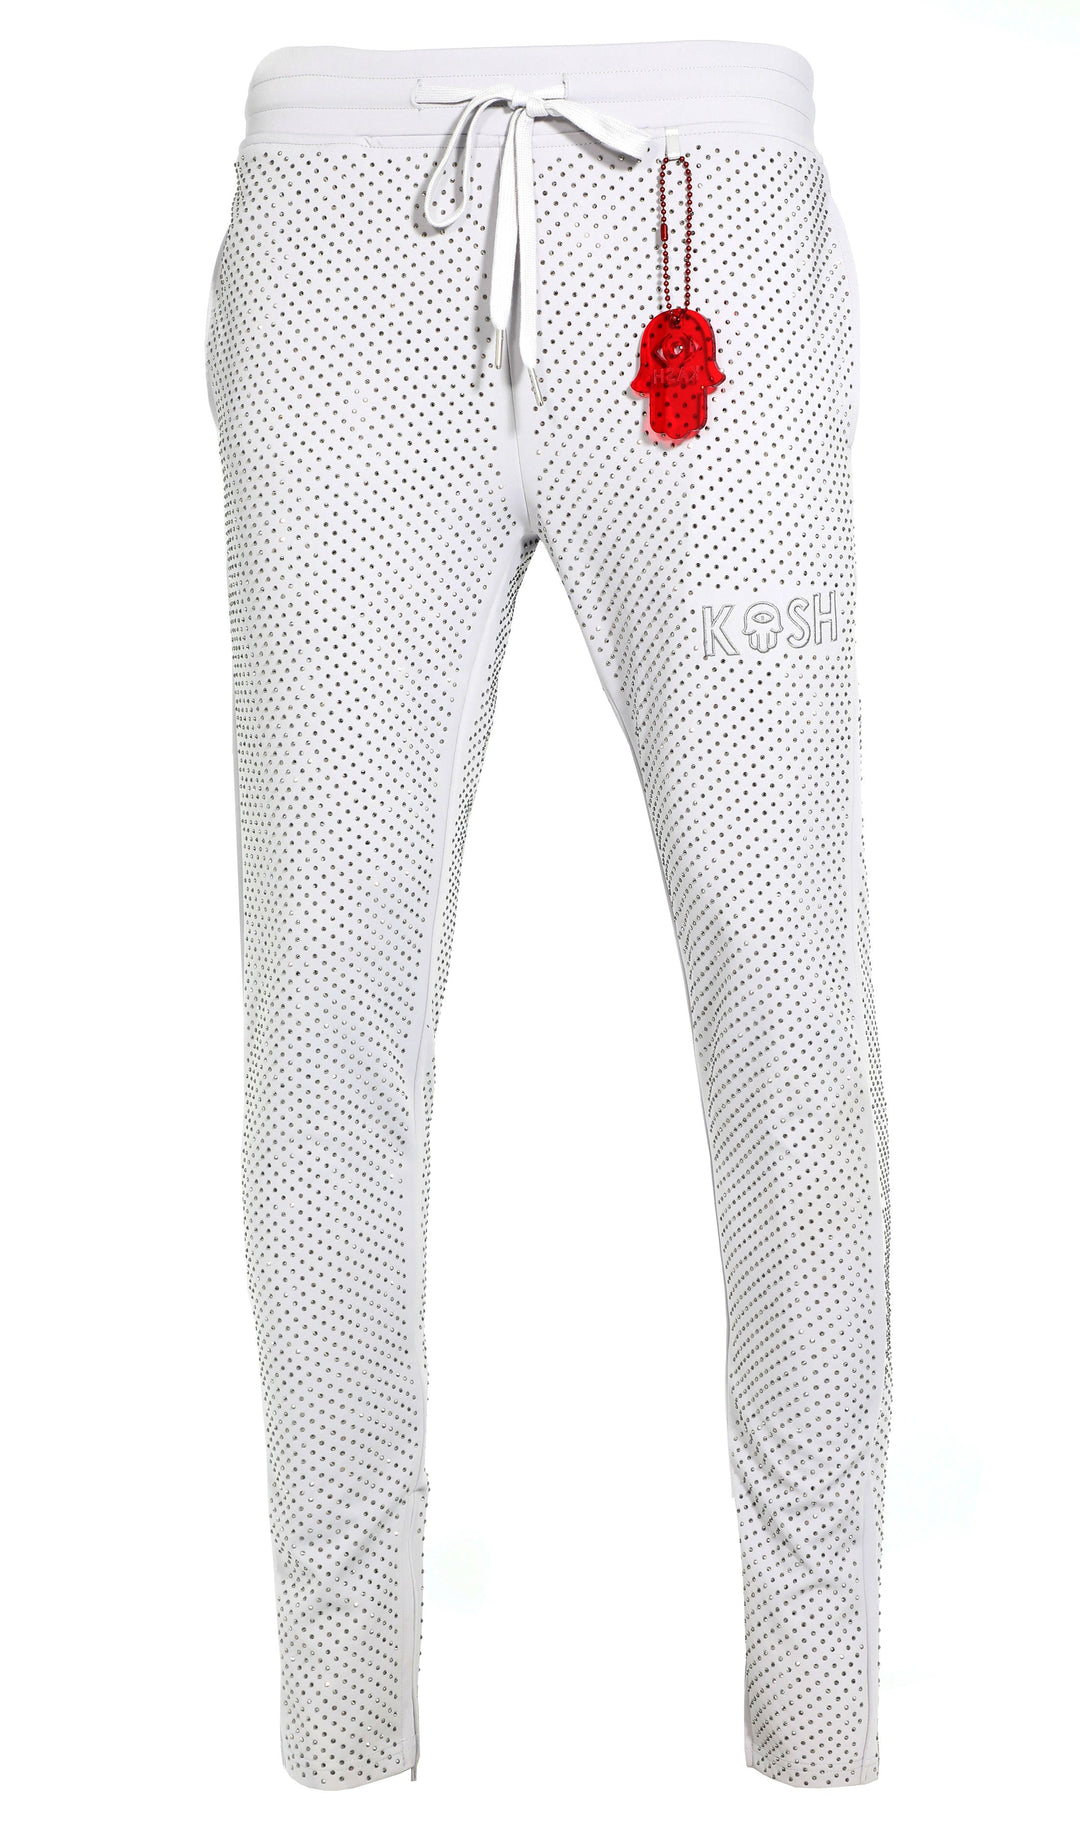 Kash Crystal Track Pants with Hamsa Logo Side Stripes detail Color: Light Grey Wrinkle Free Material Fits true to size